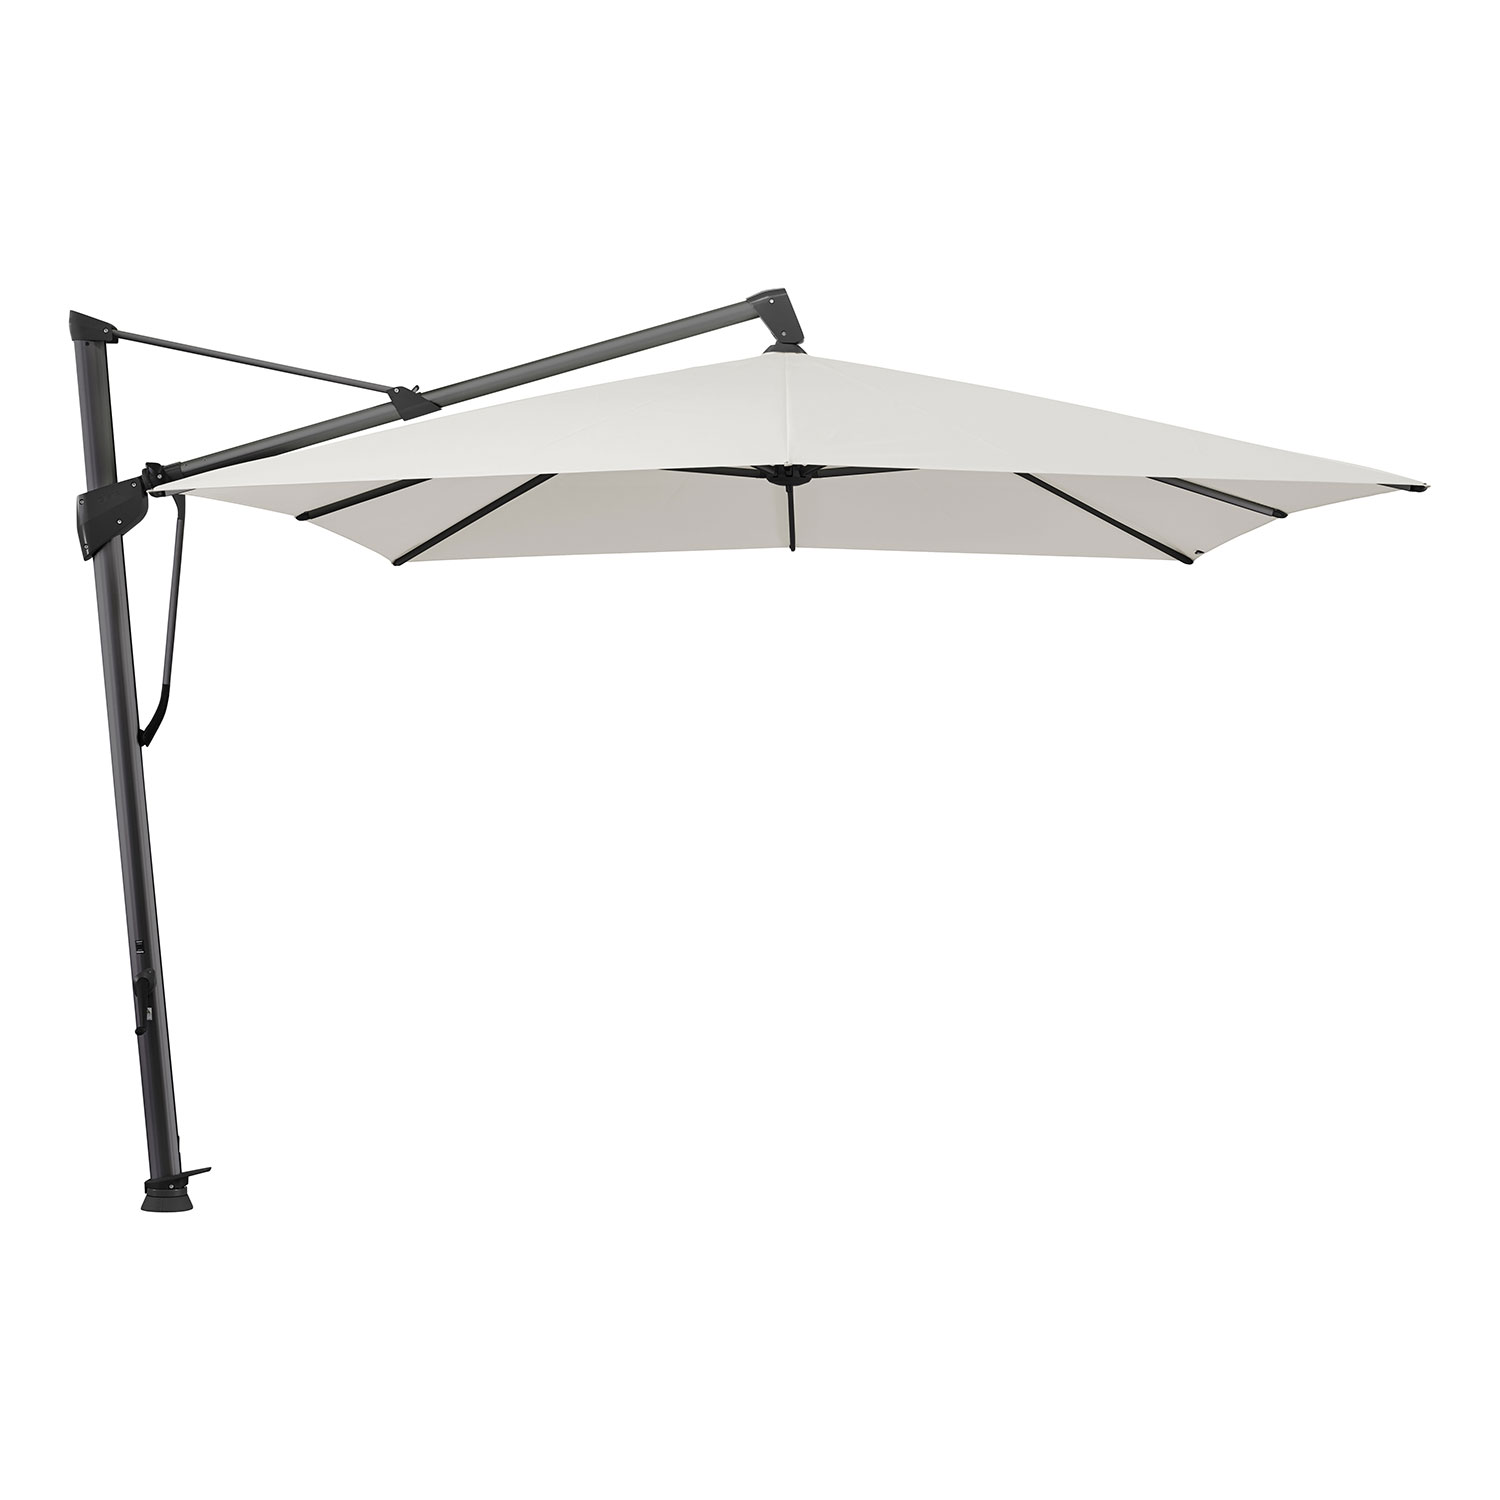 Glatz Sombrano S+ frihängande parasoll 400×300 cm kat.5 antracite alu / 500 plaster